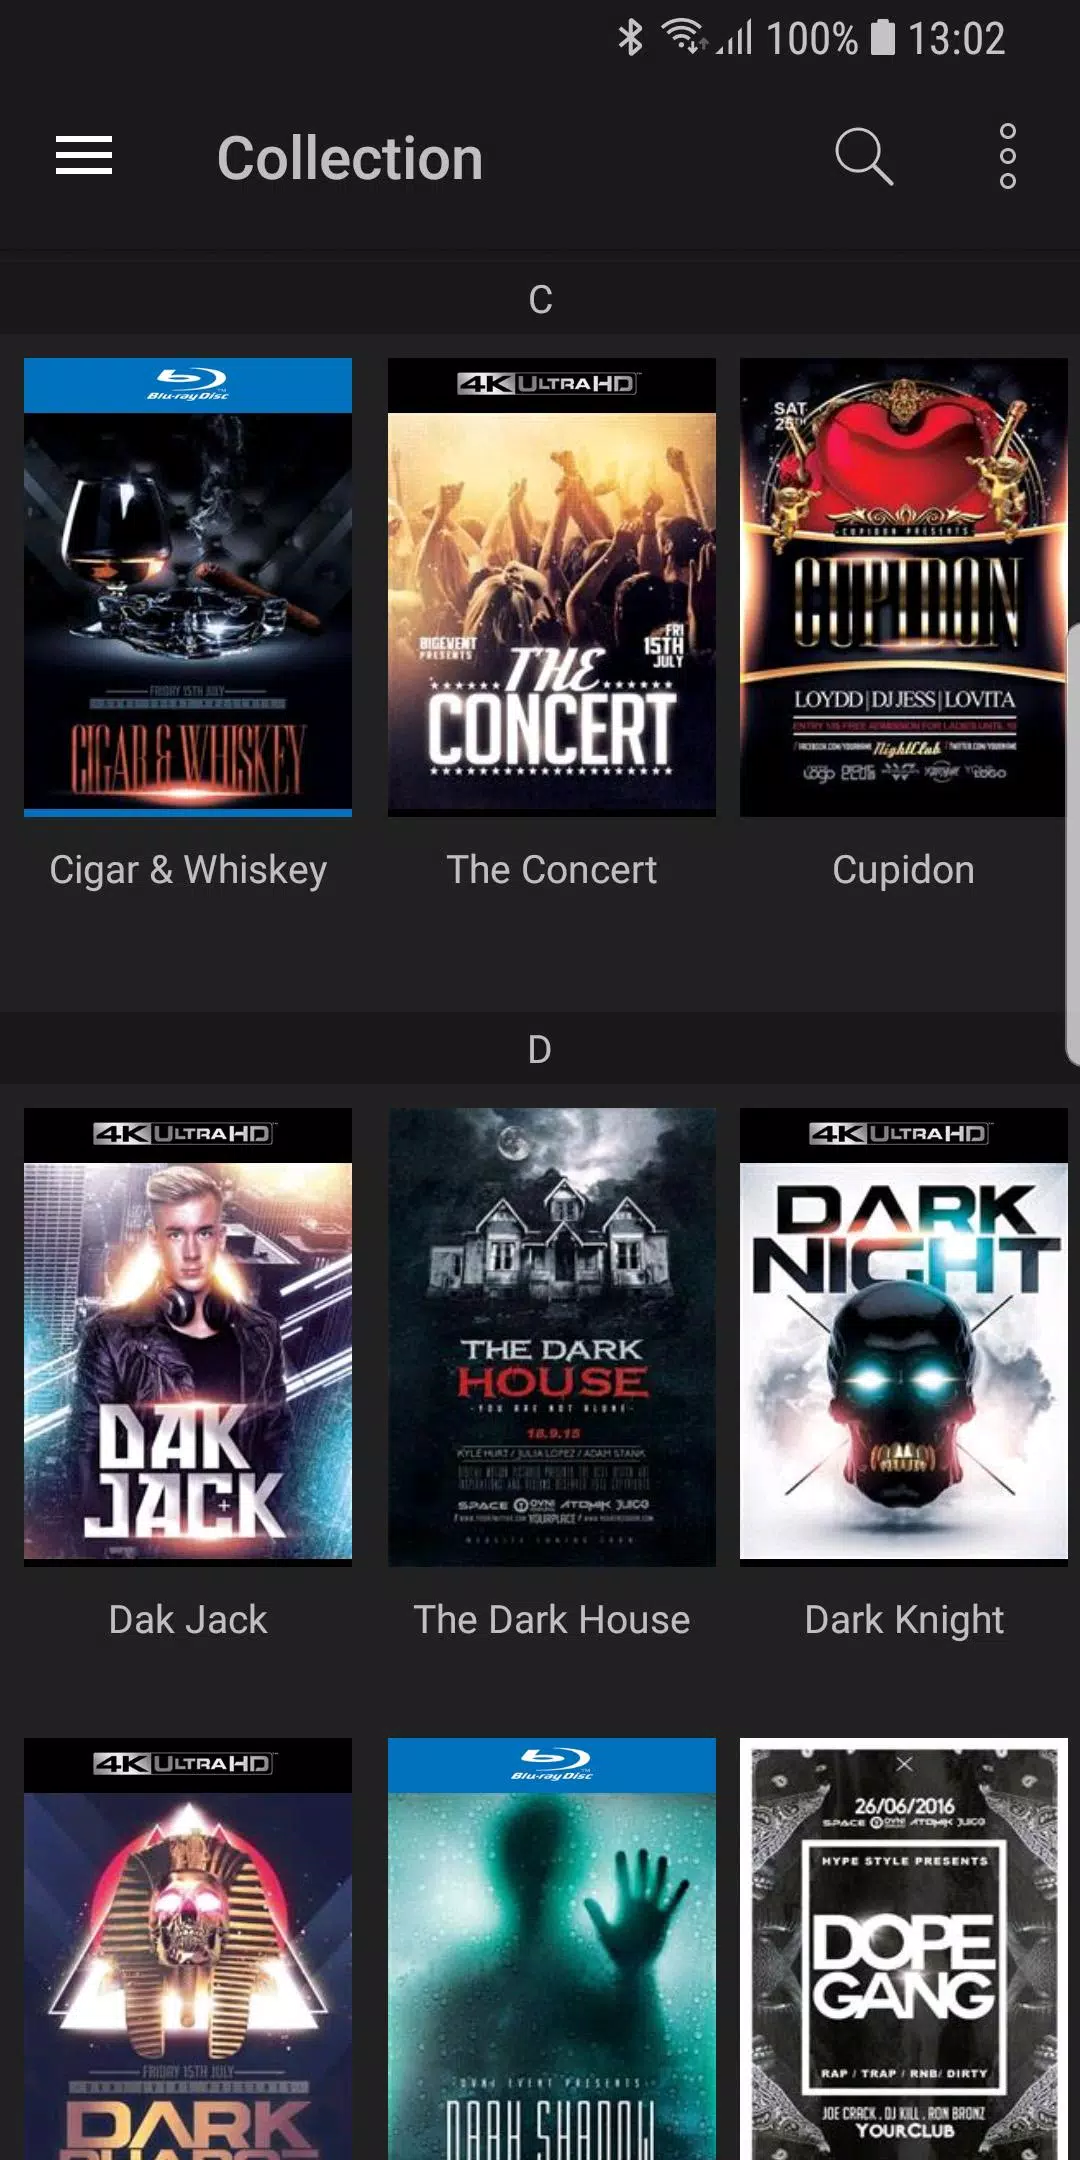 Meu Cinema Online APK for Android Download